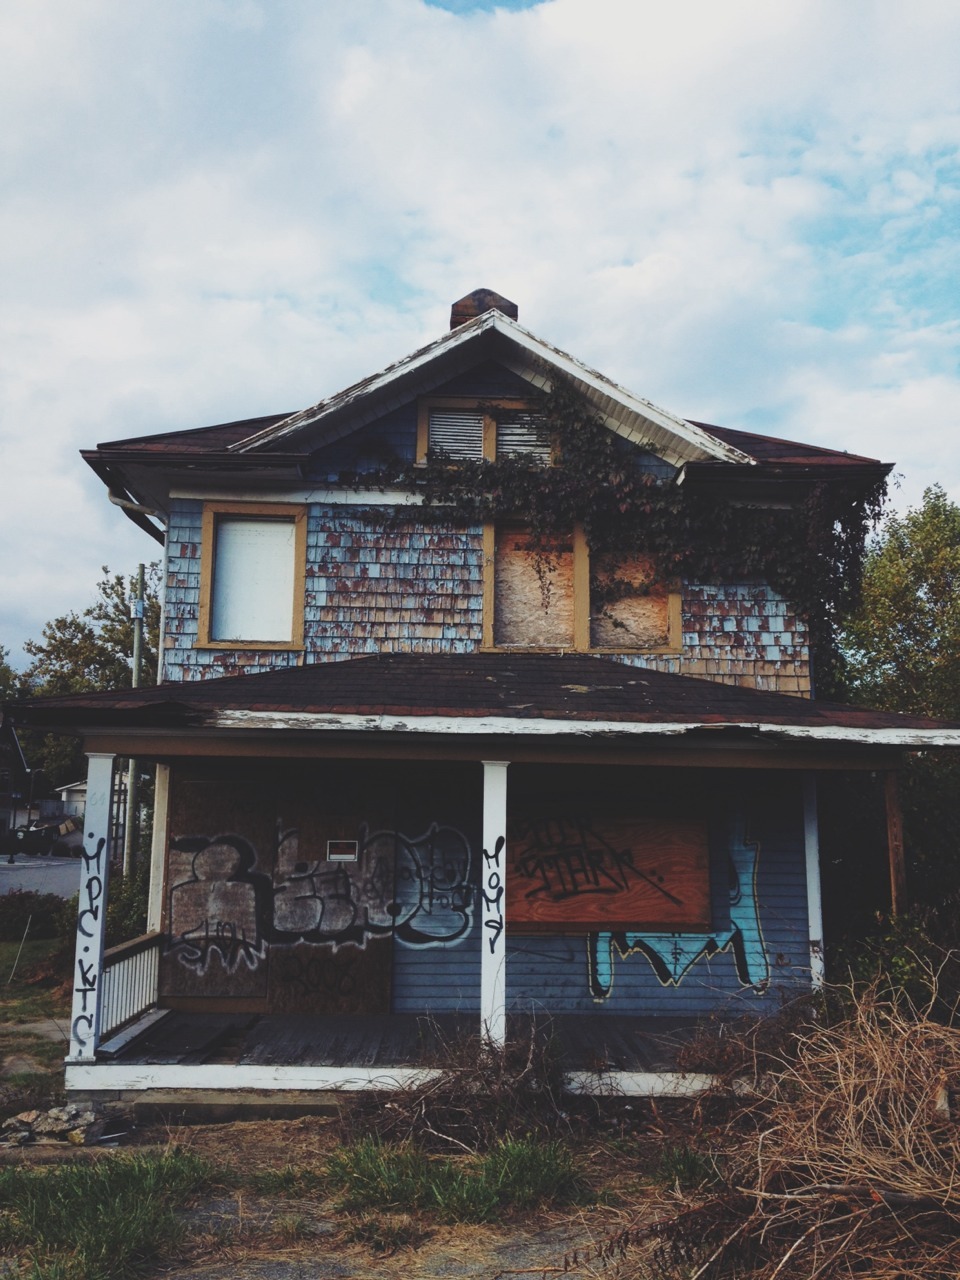 16-bars:

Abandoned house

Instagram @joshuacriss